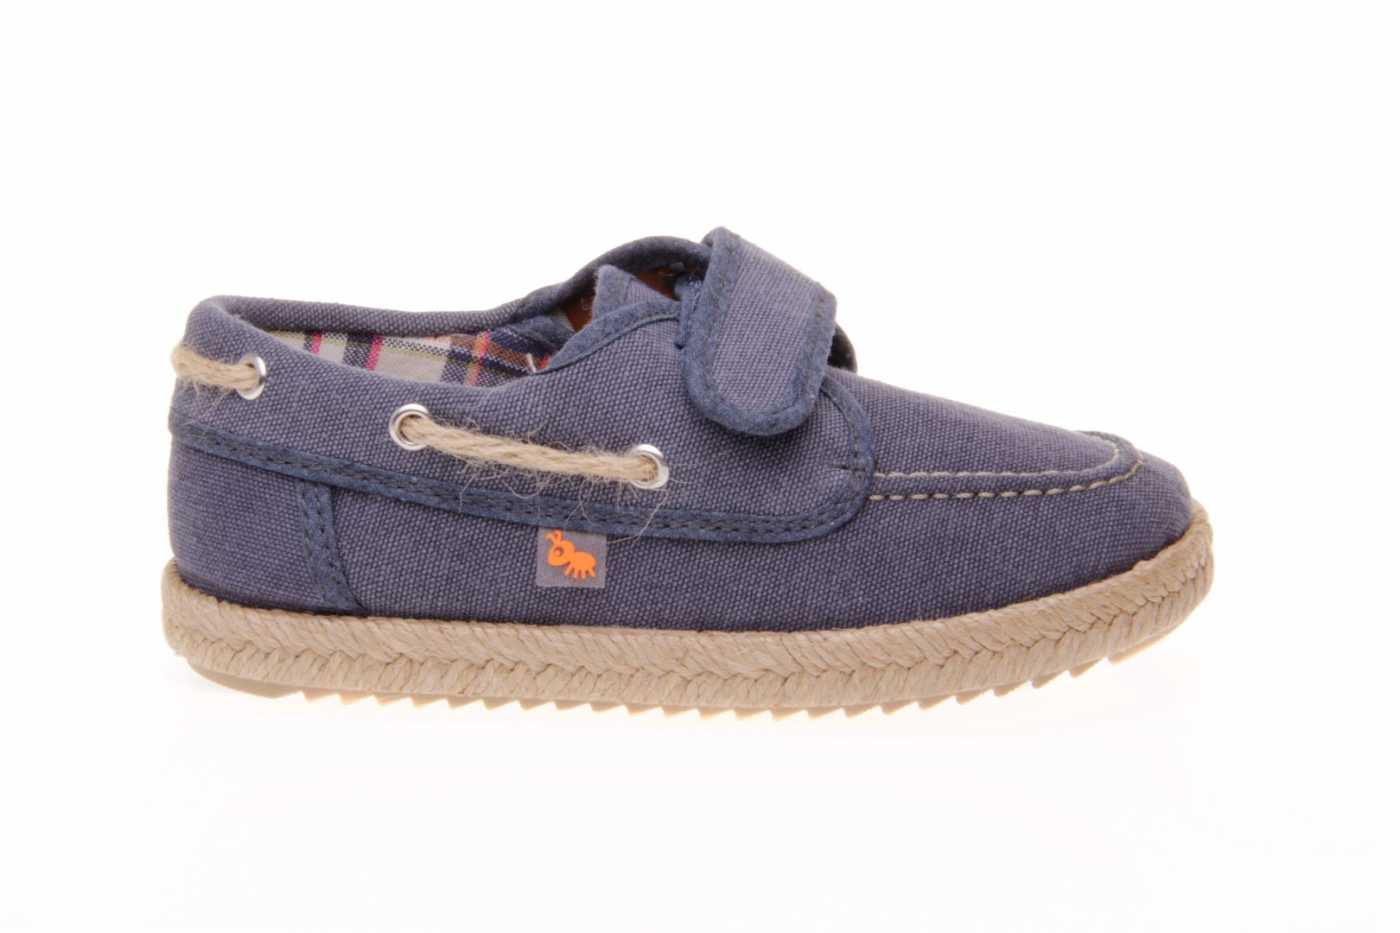 Comprar zapato FANTASIA KIDS para JOVEN NIÑO estilo NAUTICO color MARINO LONA